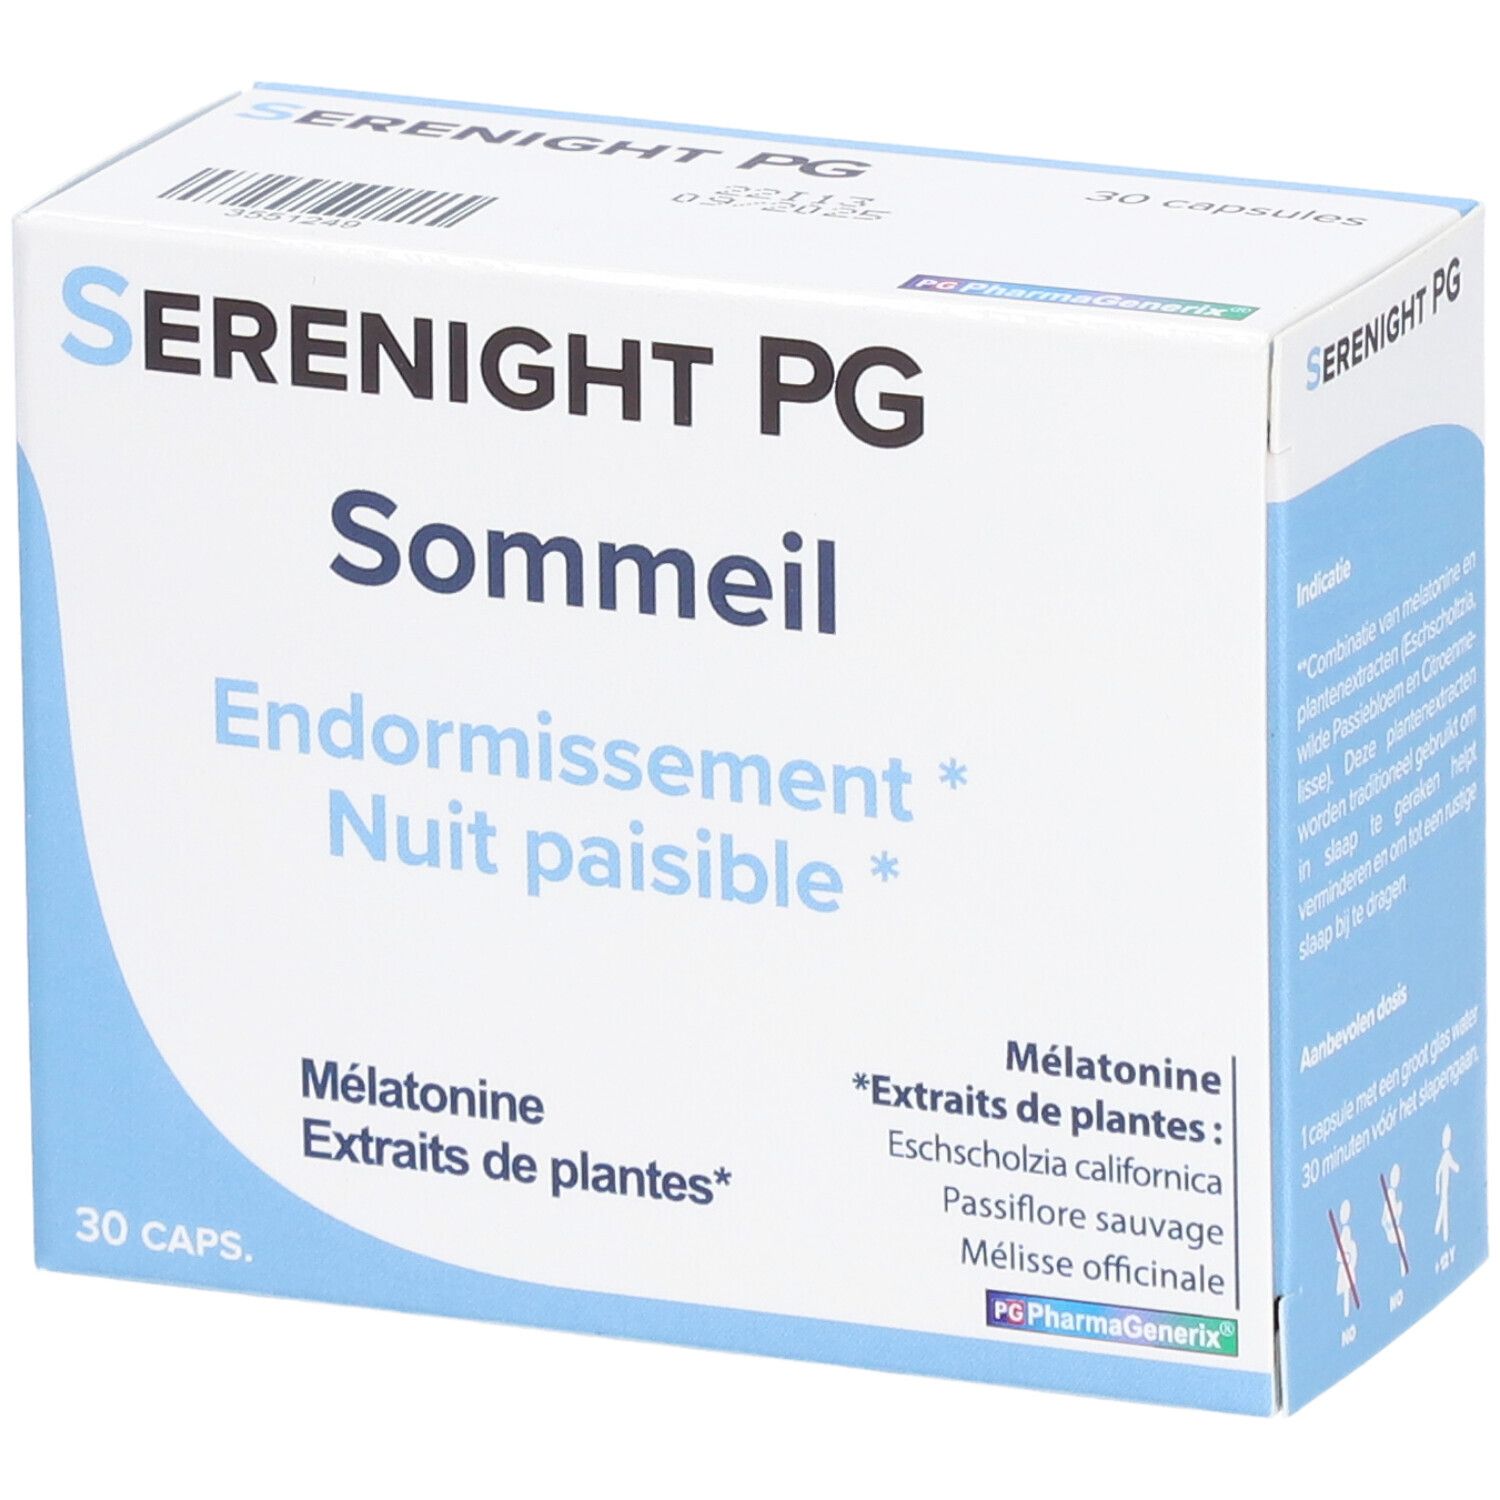 PharmaGenerix Serenight PG Sommeil